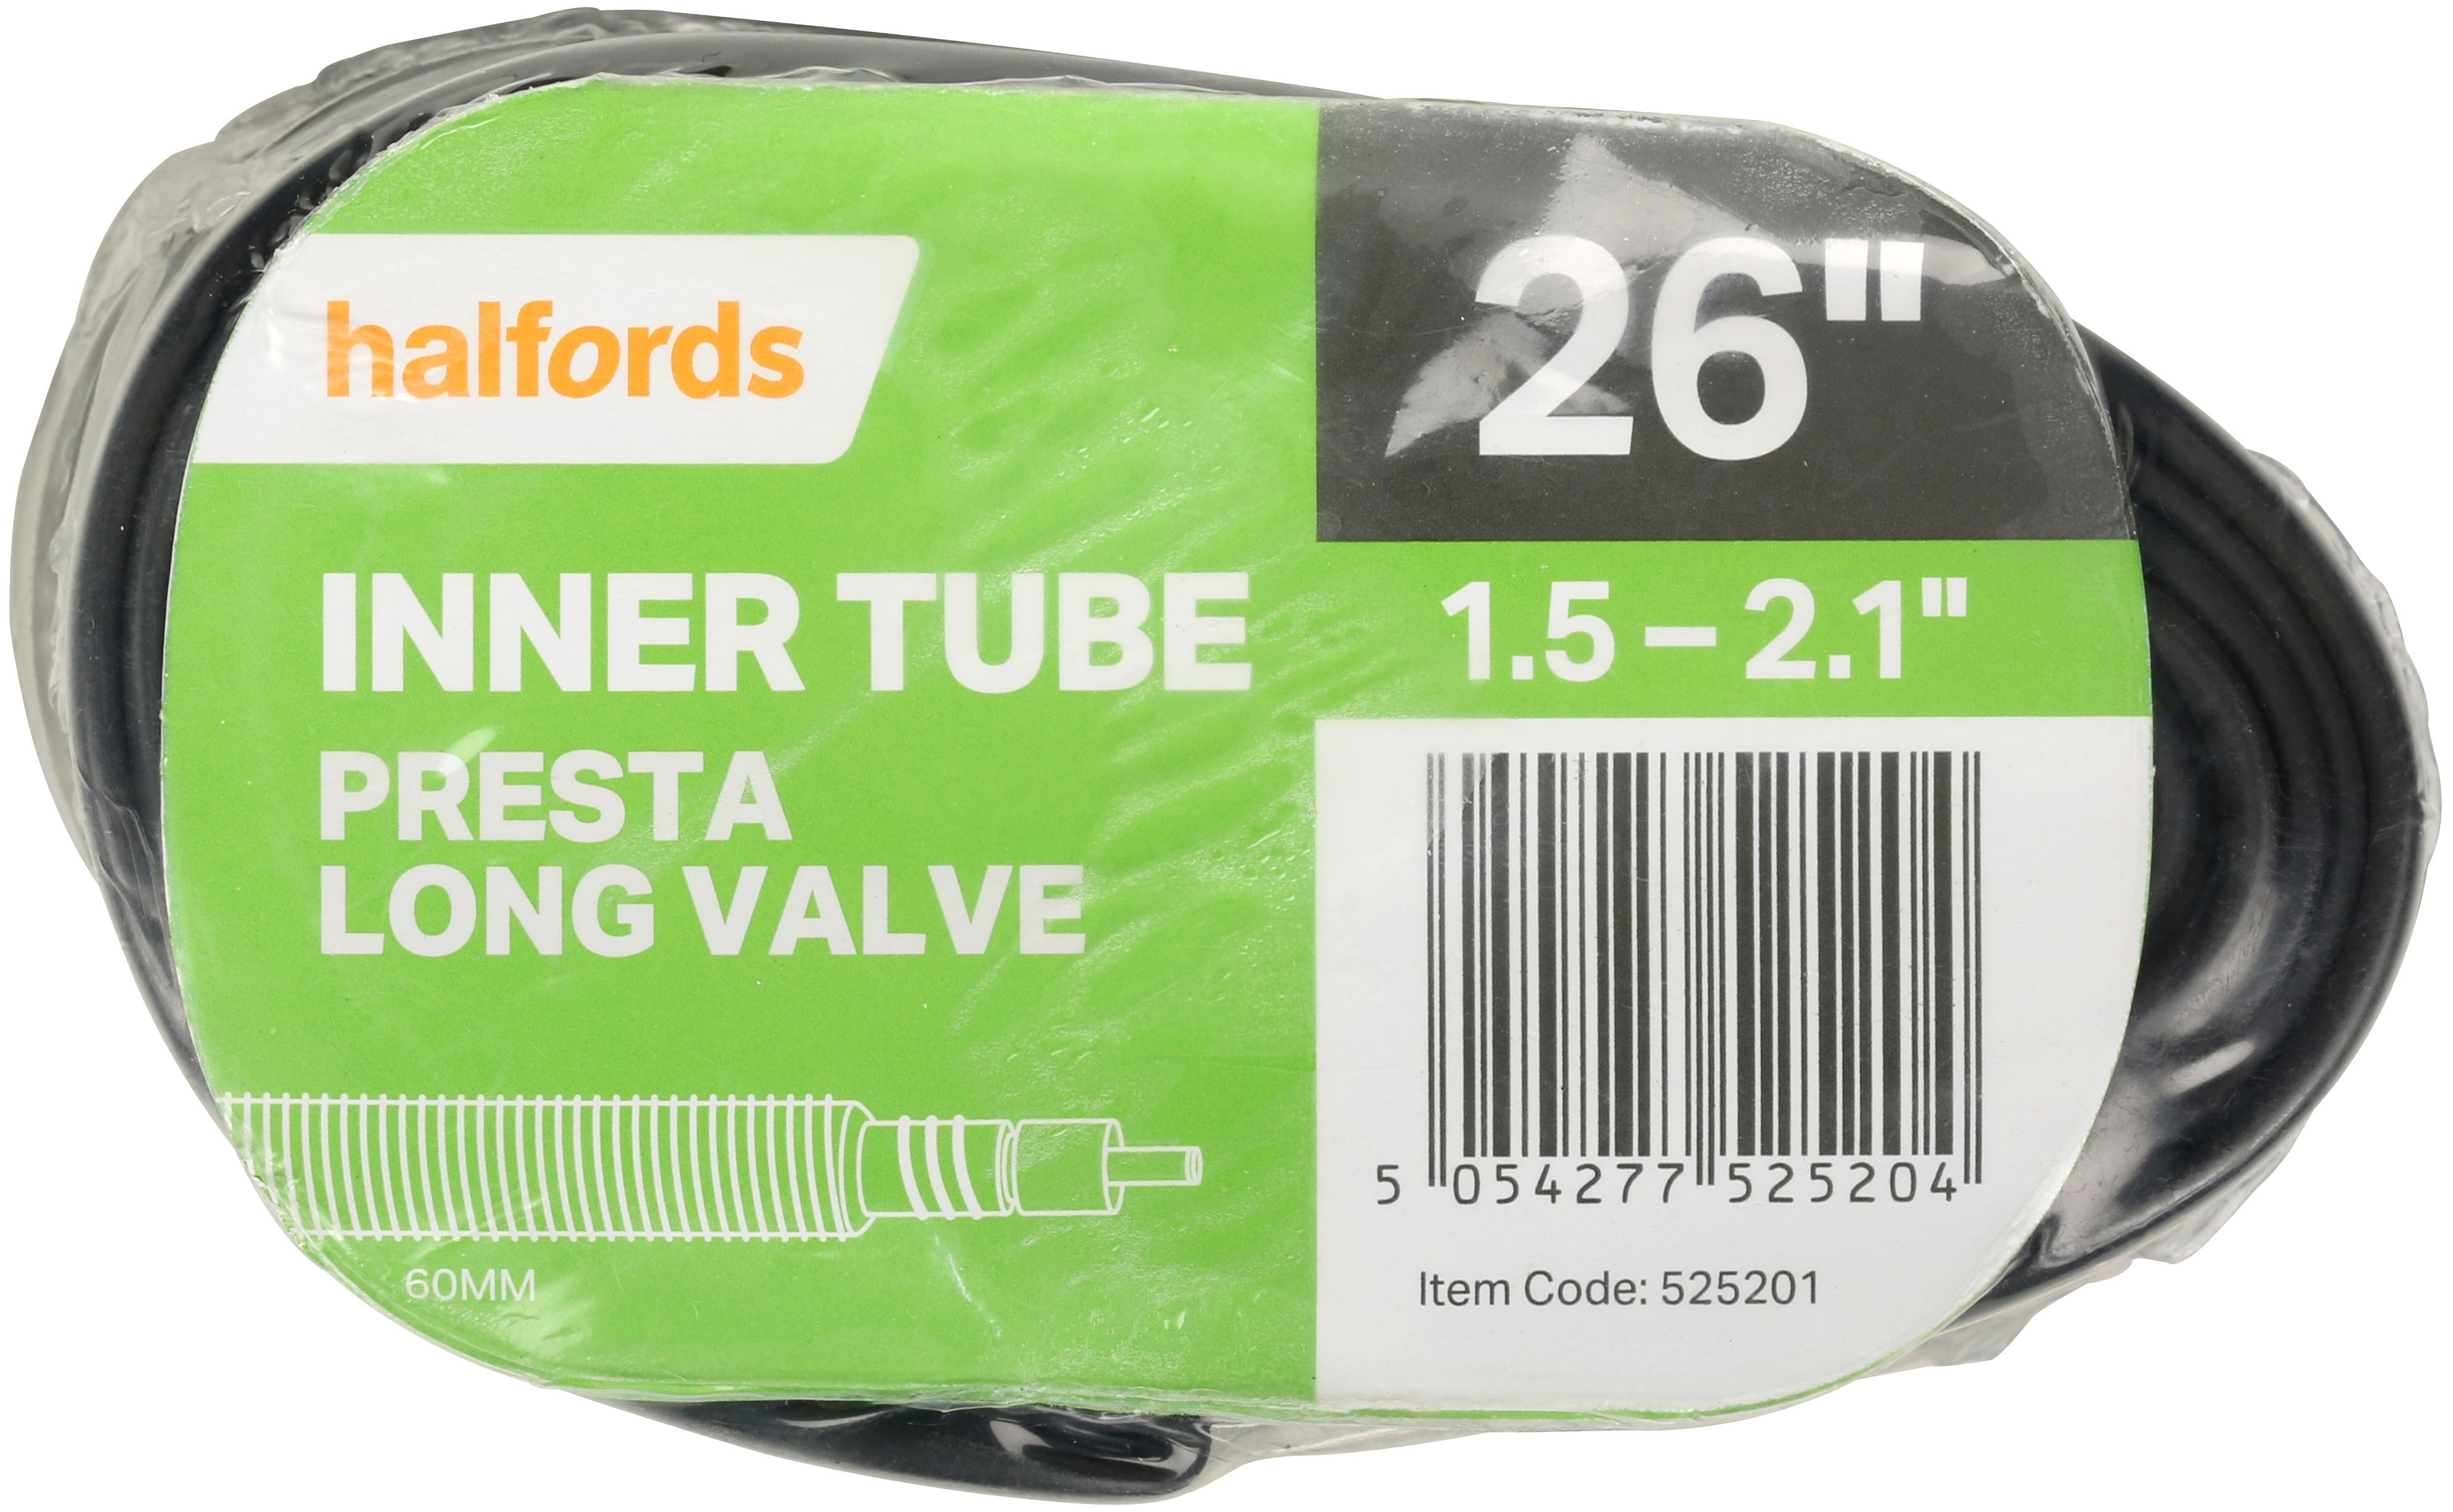 Halfords Presta Bike Inner Tube - 26 X 1.5 - 2.1 - Long Valve